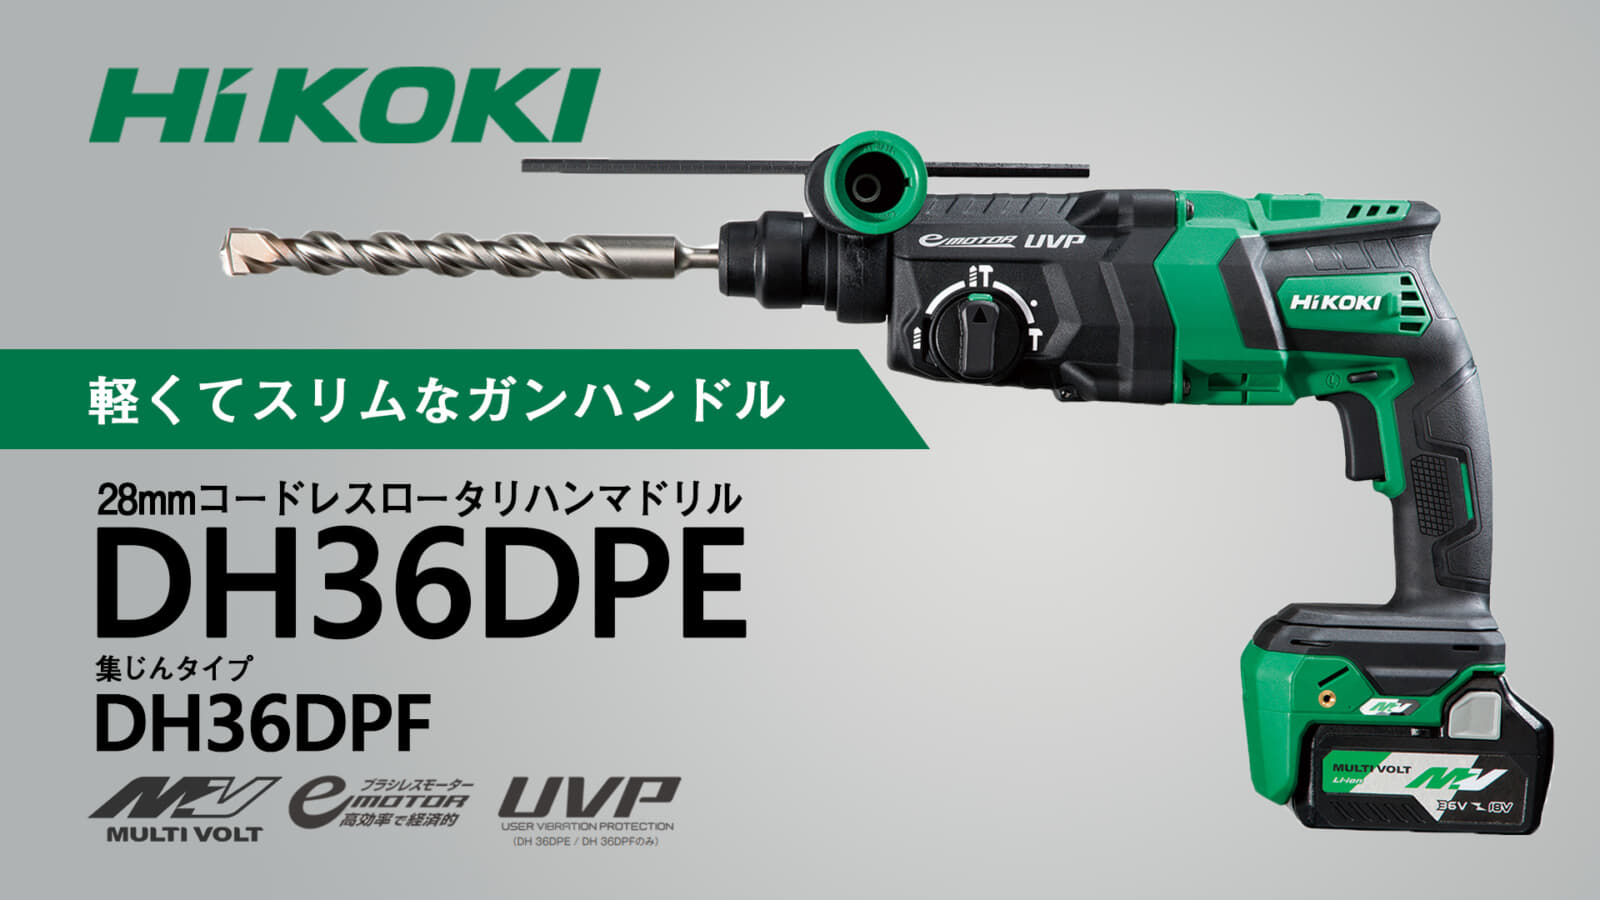 HiKOKI DH36DPE 28mmコードレスロータリハンマドリル、軽くてスリムなガンハンドル仕様